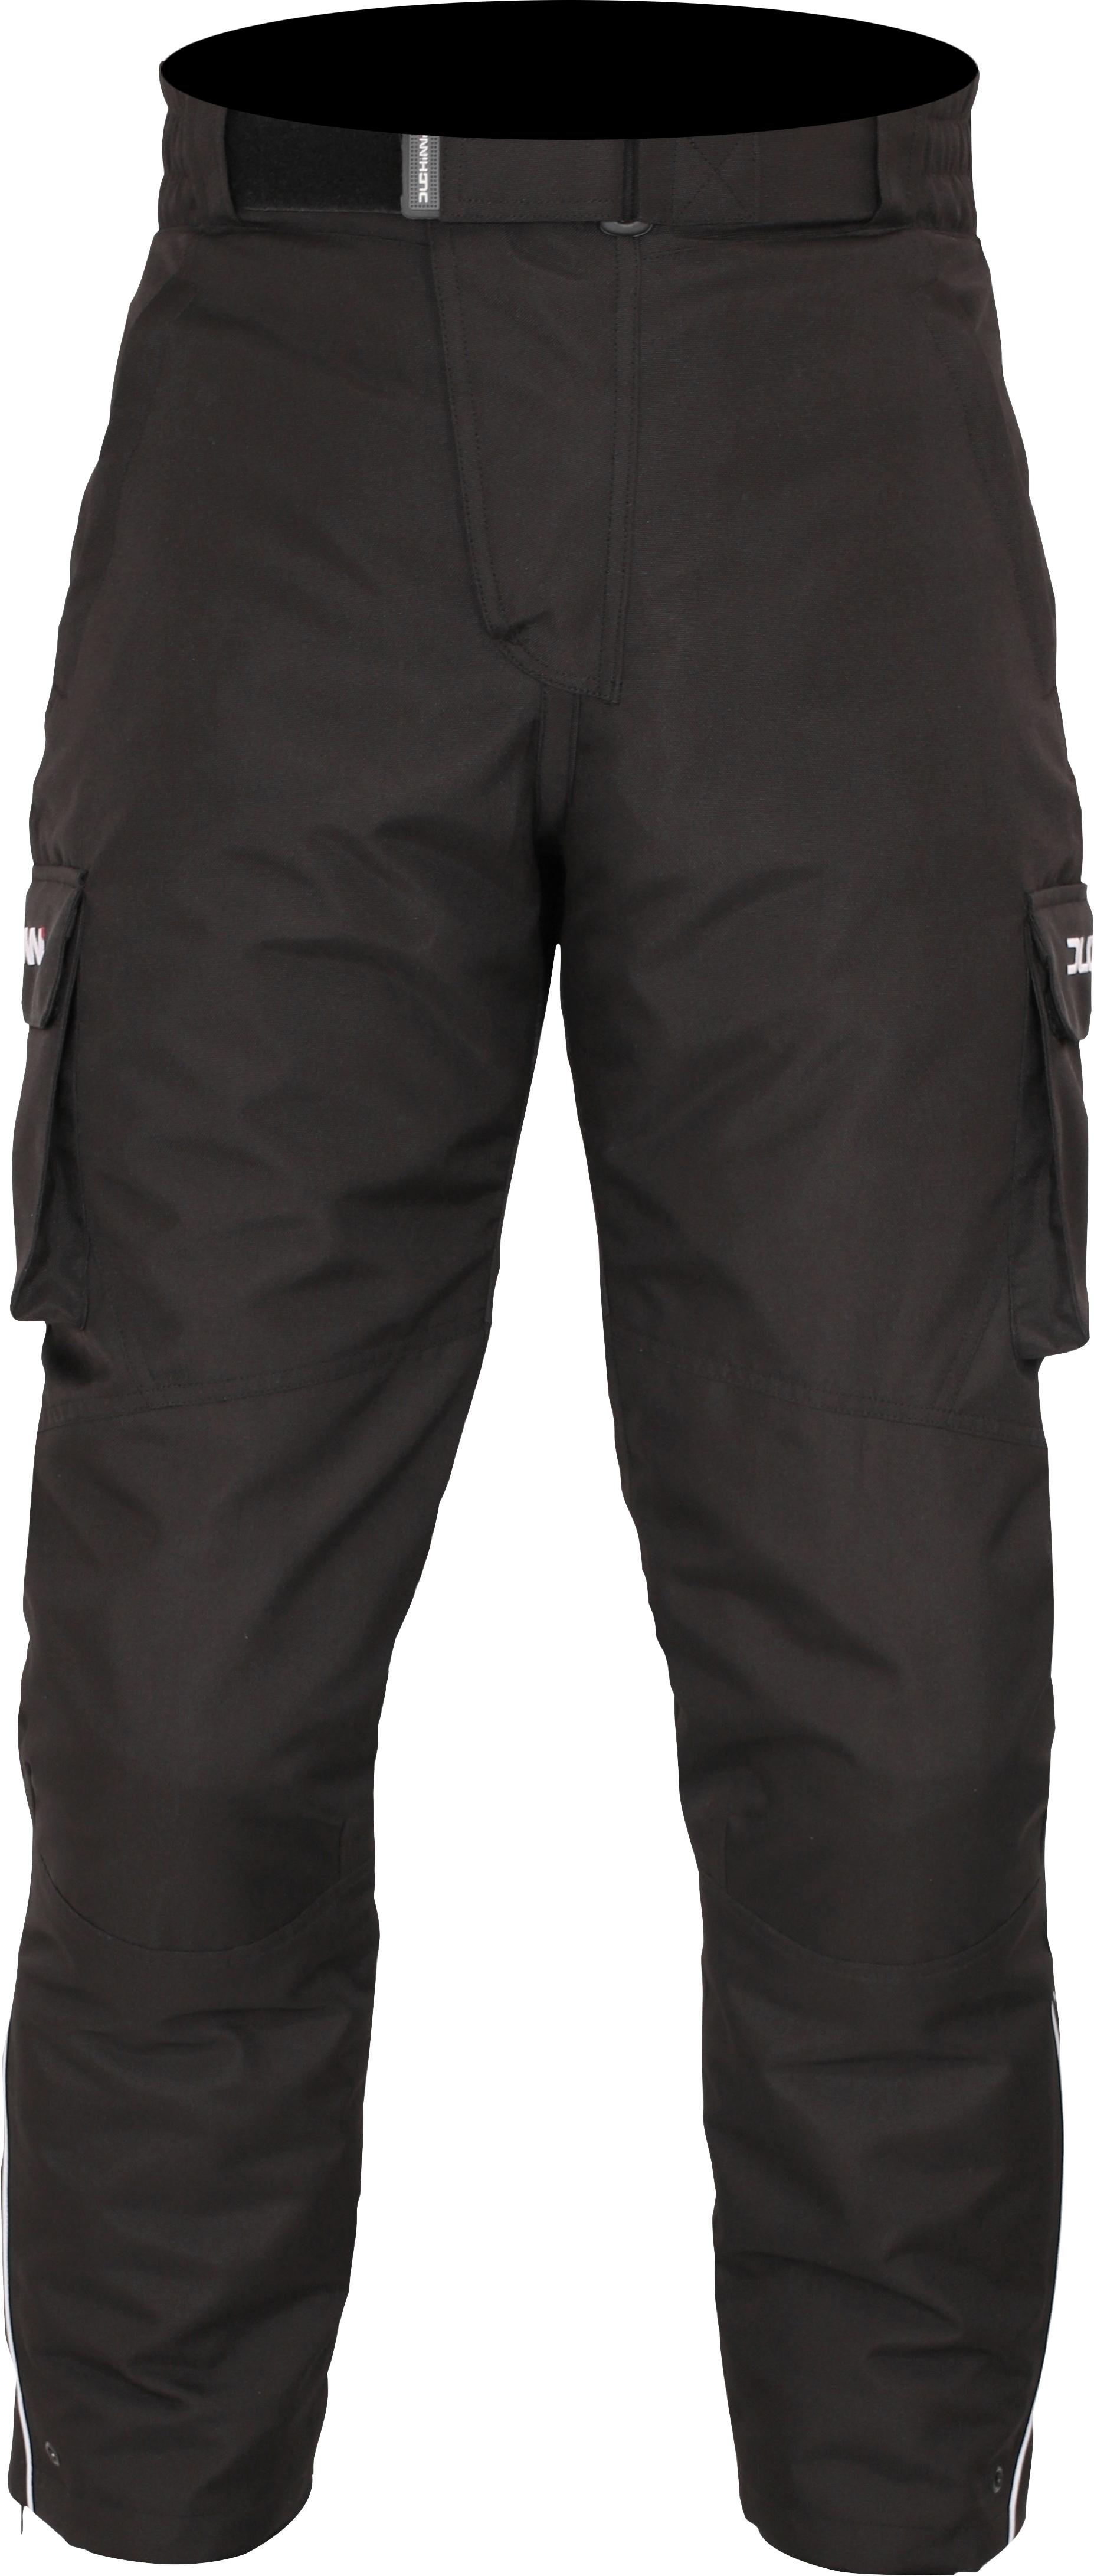 Duchinni Pacific Motorcycle Short Jeans - Black, 12Xl